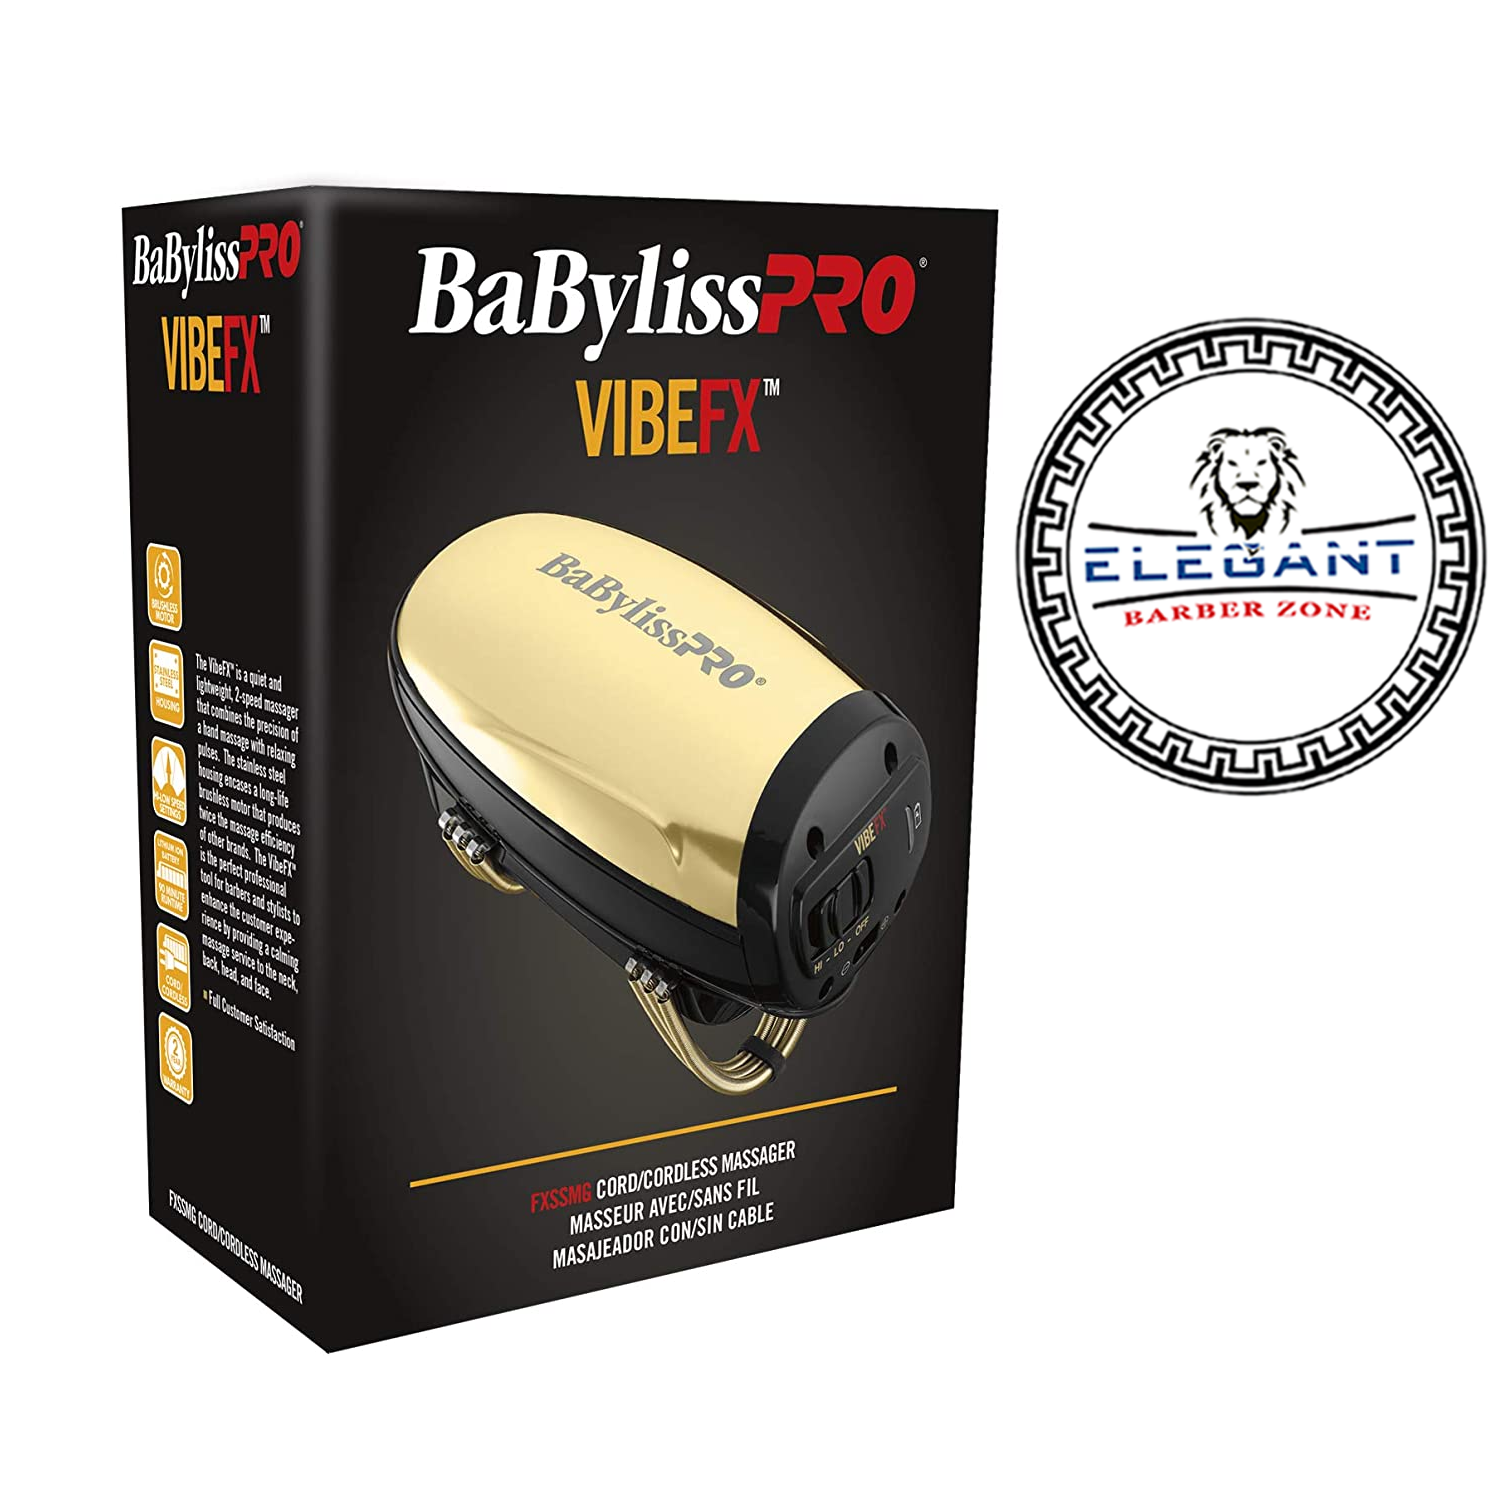 BaBylissPRO VIBEFX Cord/Cordless Massager (GOLD) 